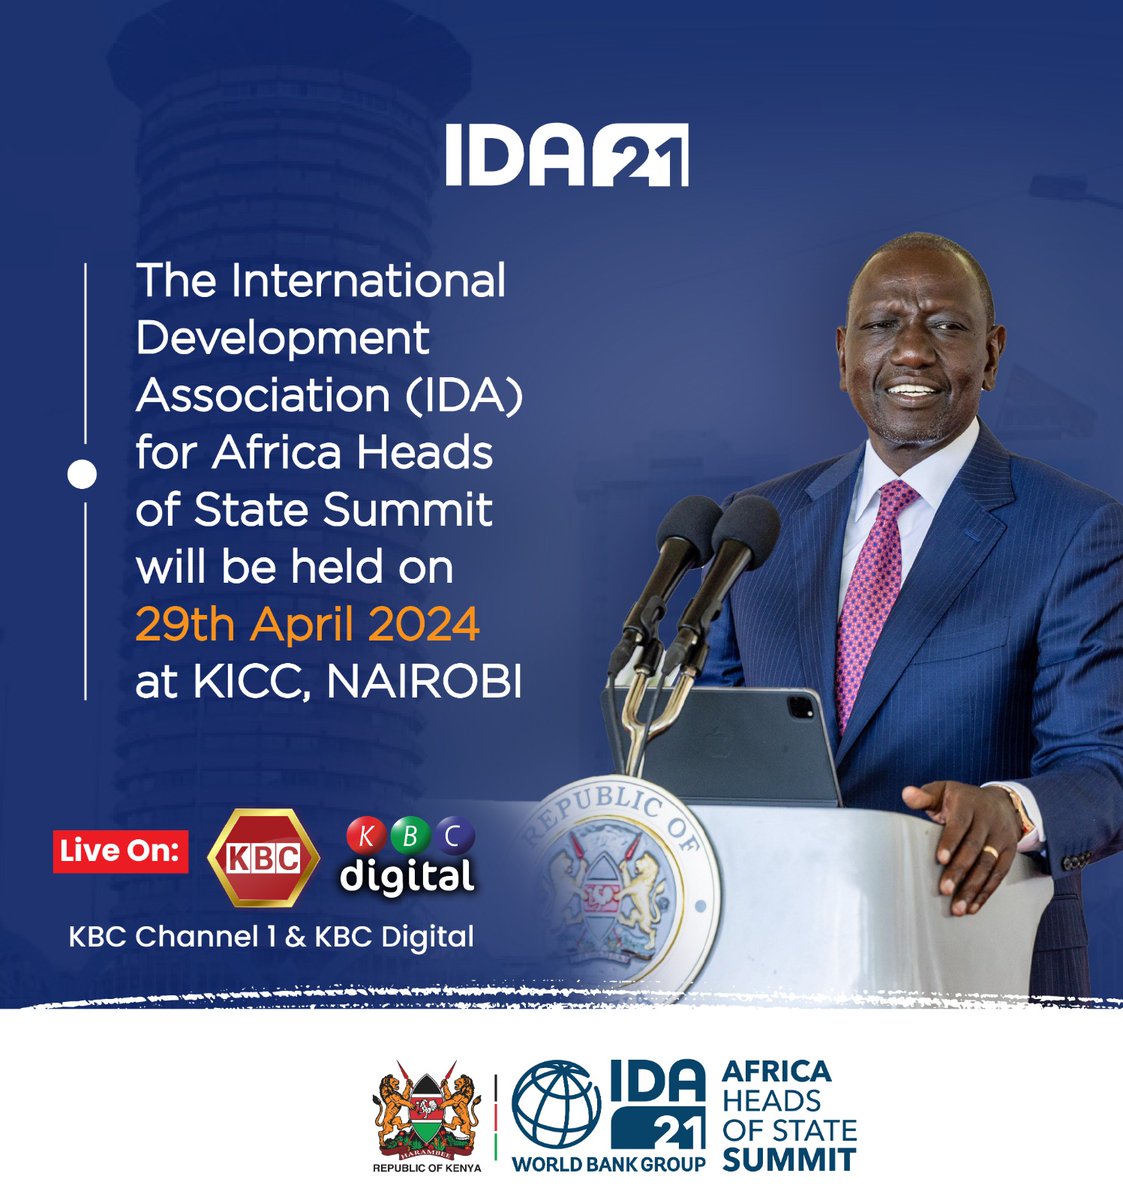 The International Development Association (IDA) for Africa Heads of State Summit will be held on 29th April, 2024. #IDAWorks #IDA21 #Kenya @KBCChannel1